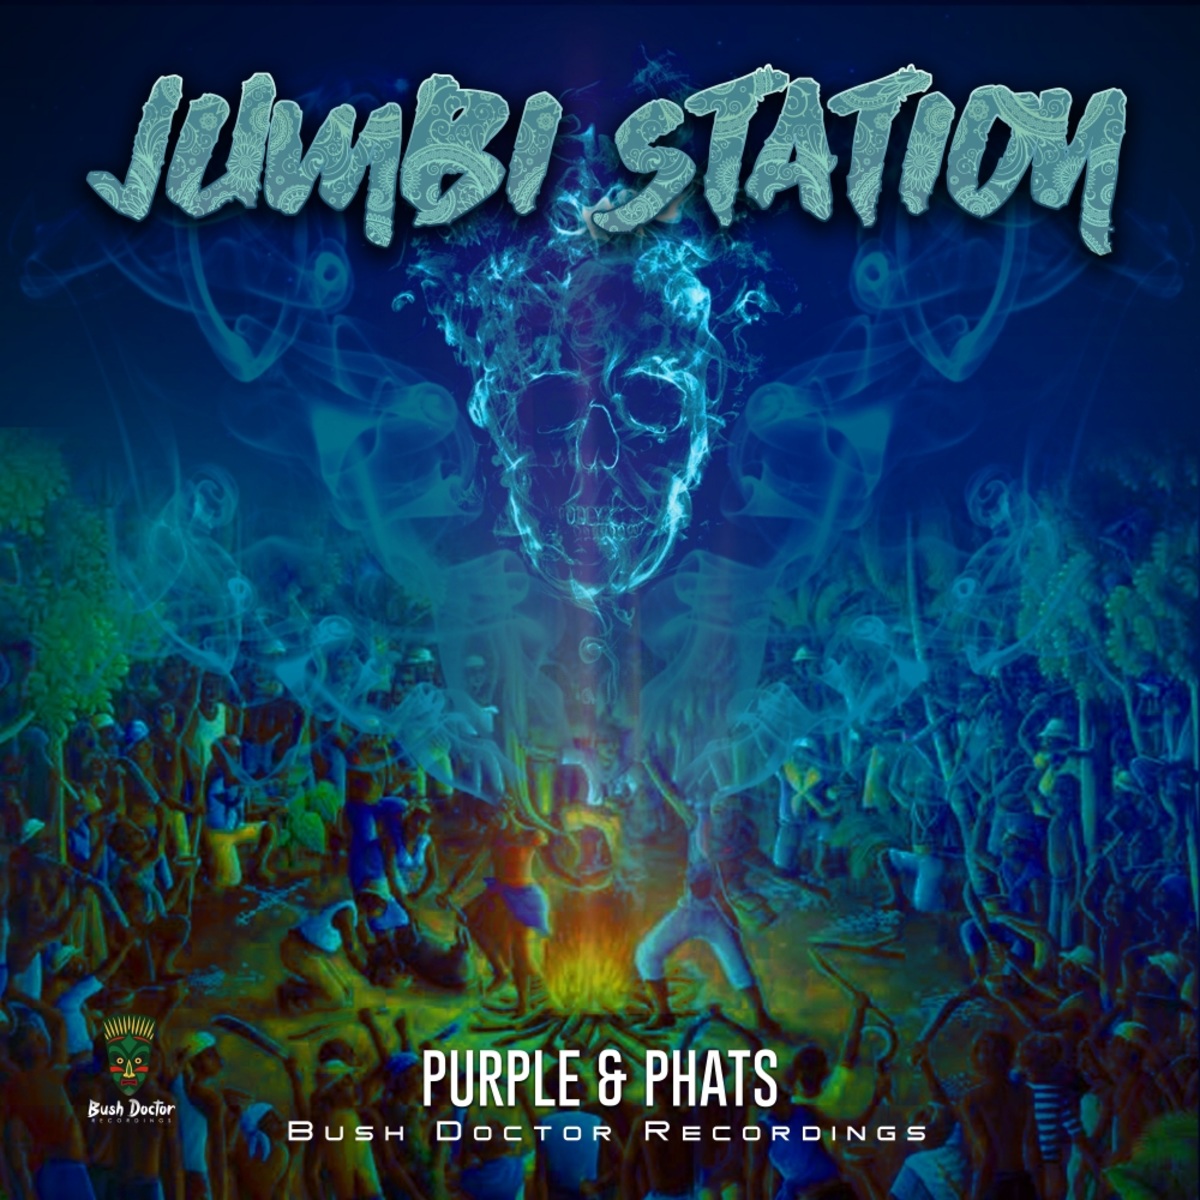 Purple & Phats - Jumbi Station / Bush Doctor Recordings